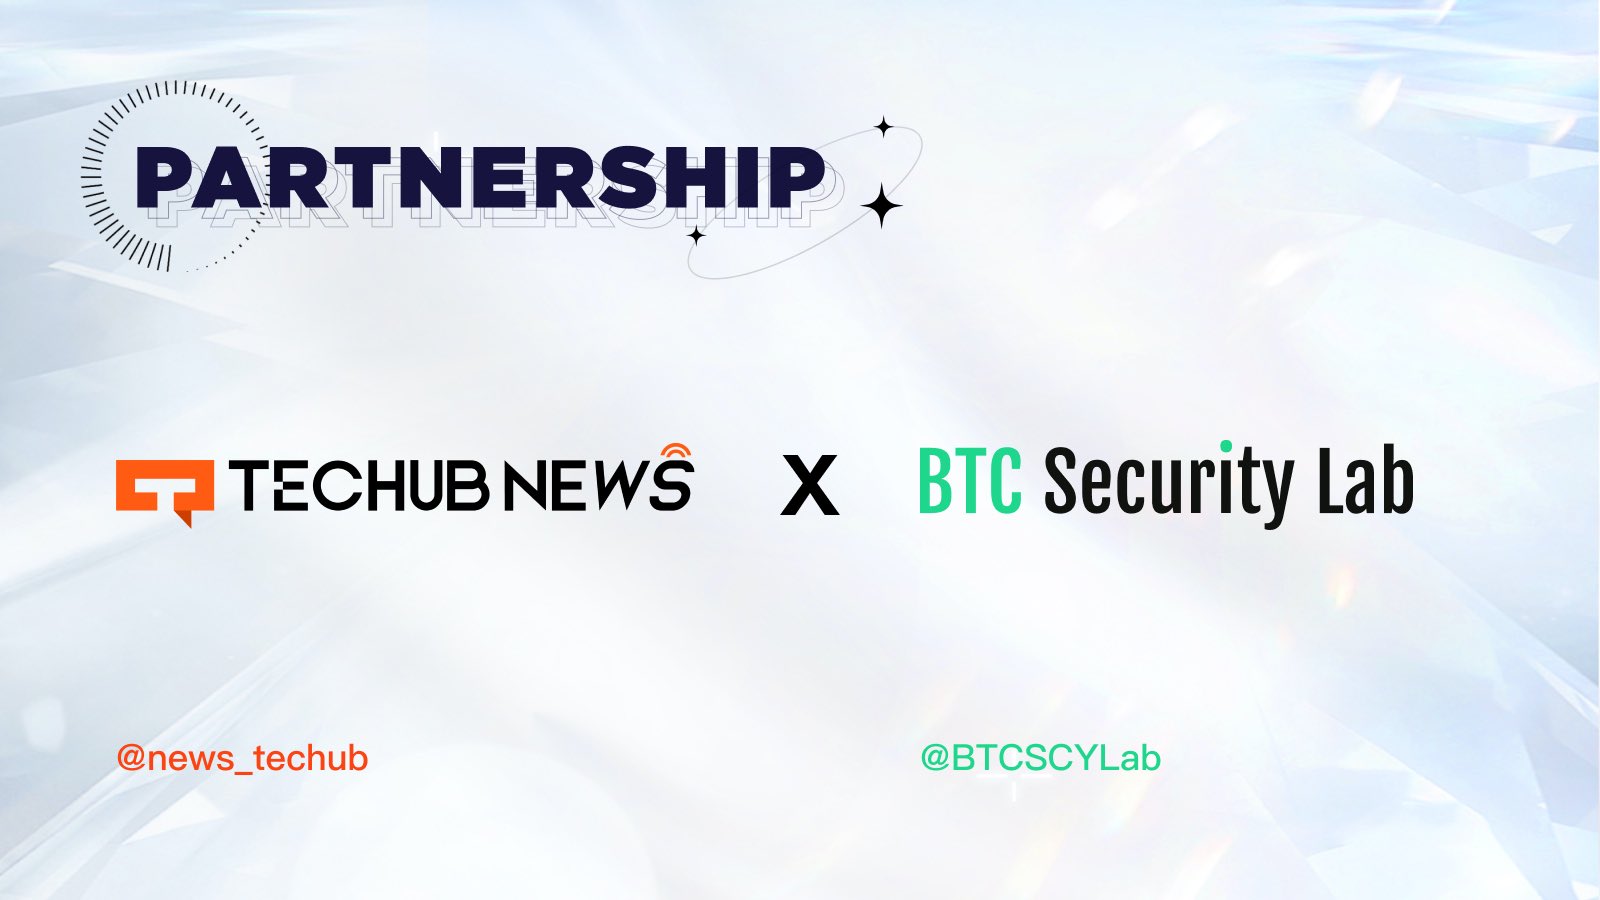 btc-security-lab-and-techub-news